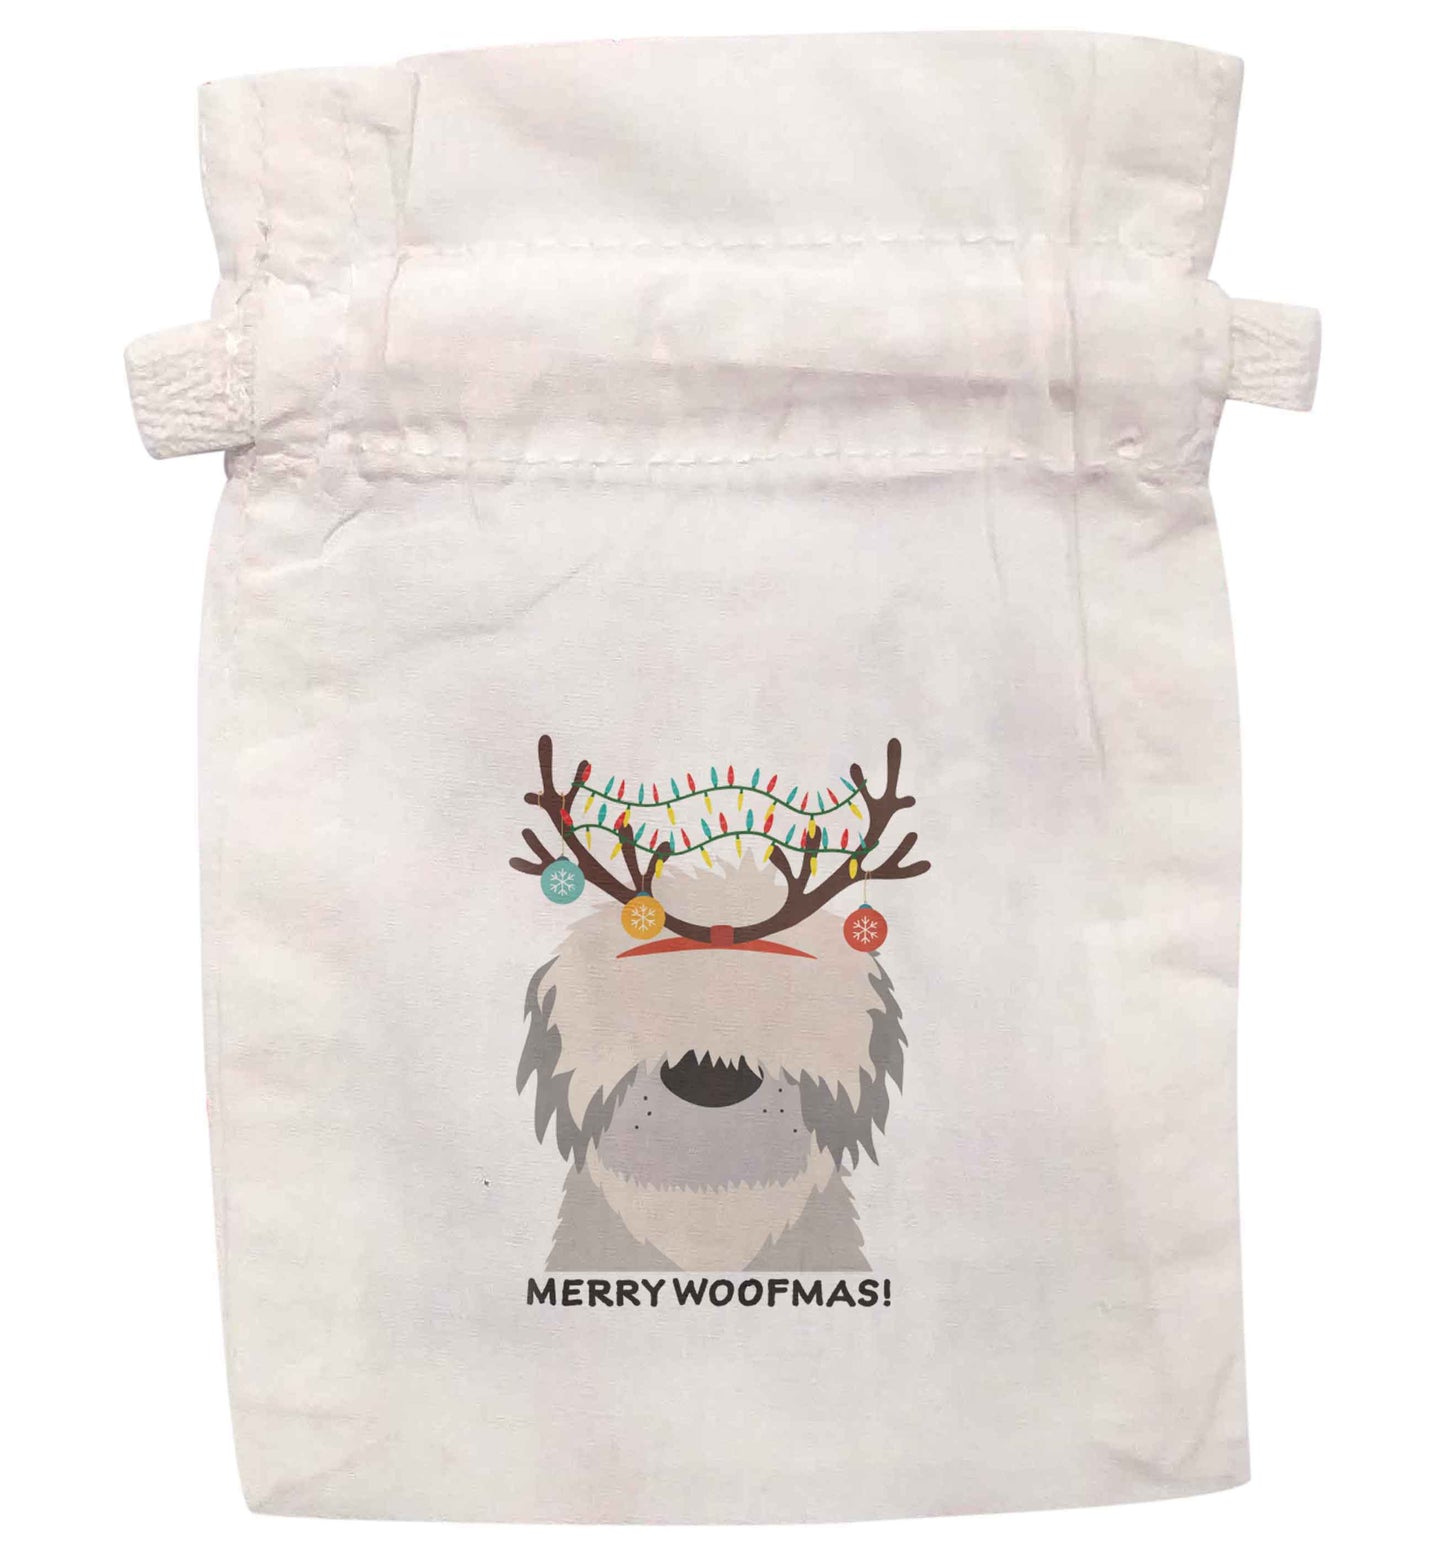 Merry Woofmas! | XS - L | Pouch / Drawstring bag / Sack | Organic Cotton | Bulk discounts available!